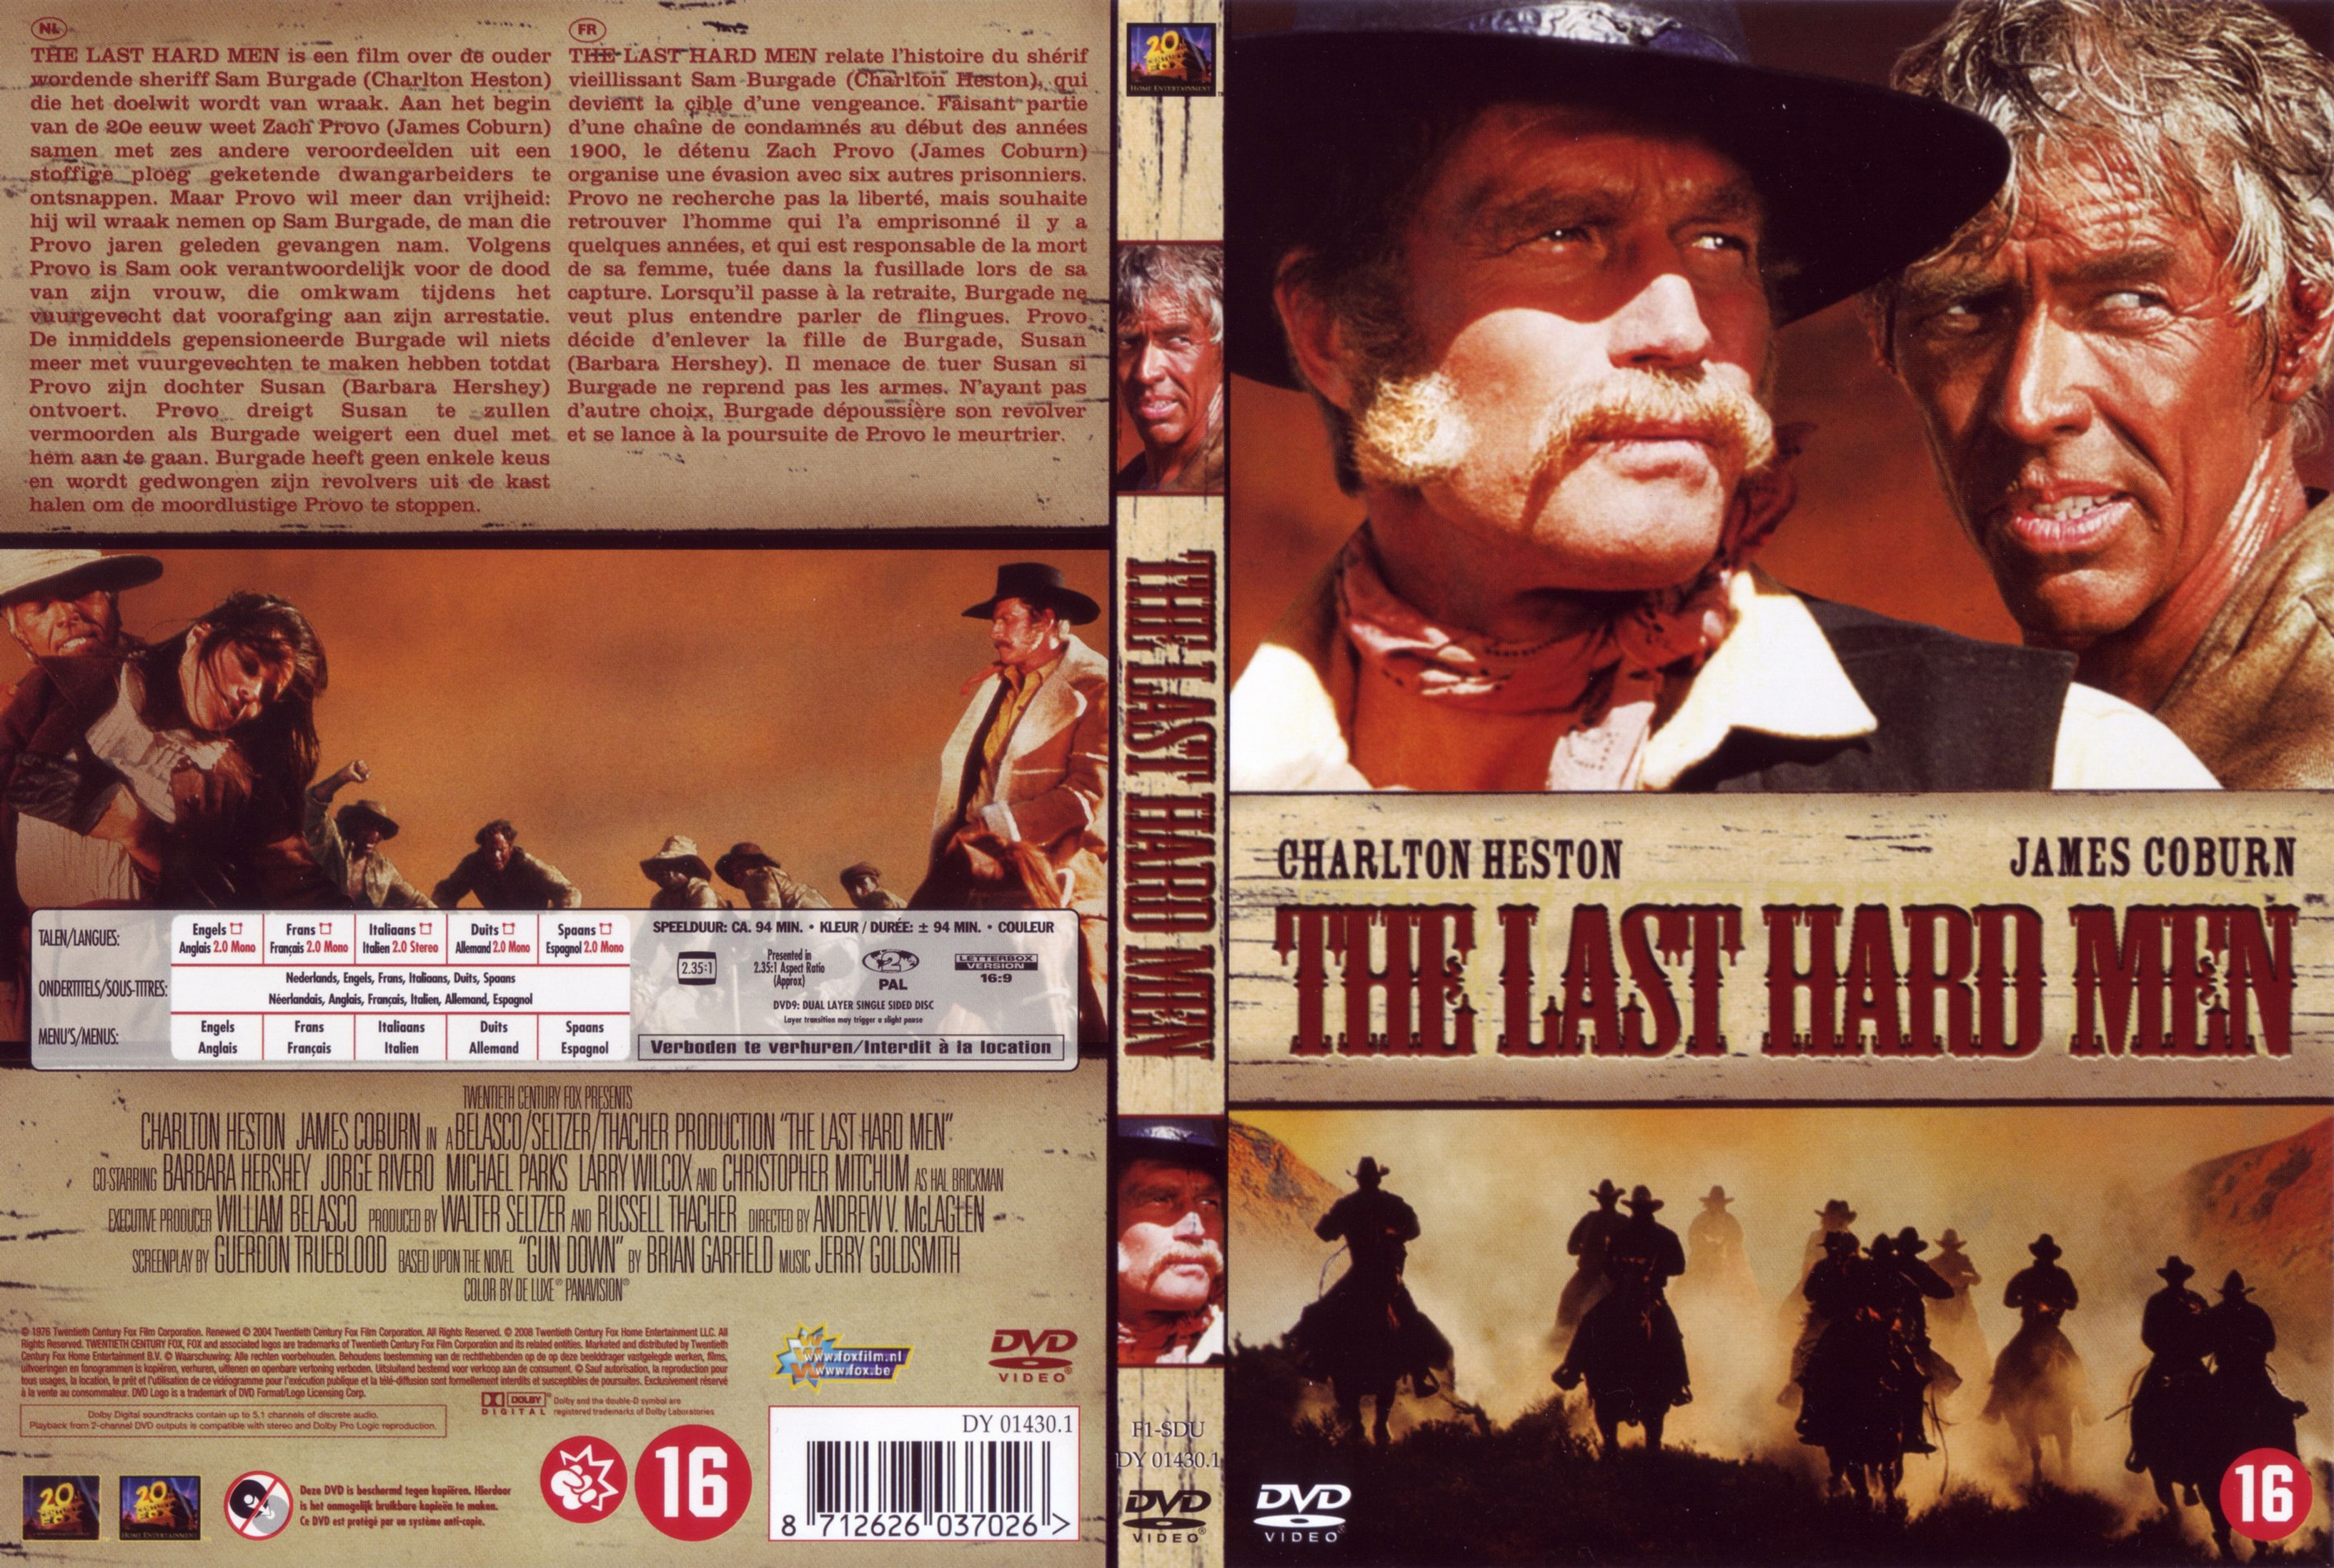 Jaquette DVD The last hard men